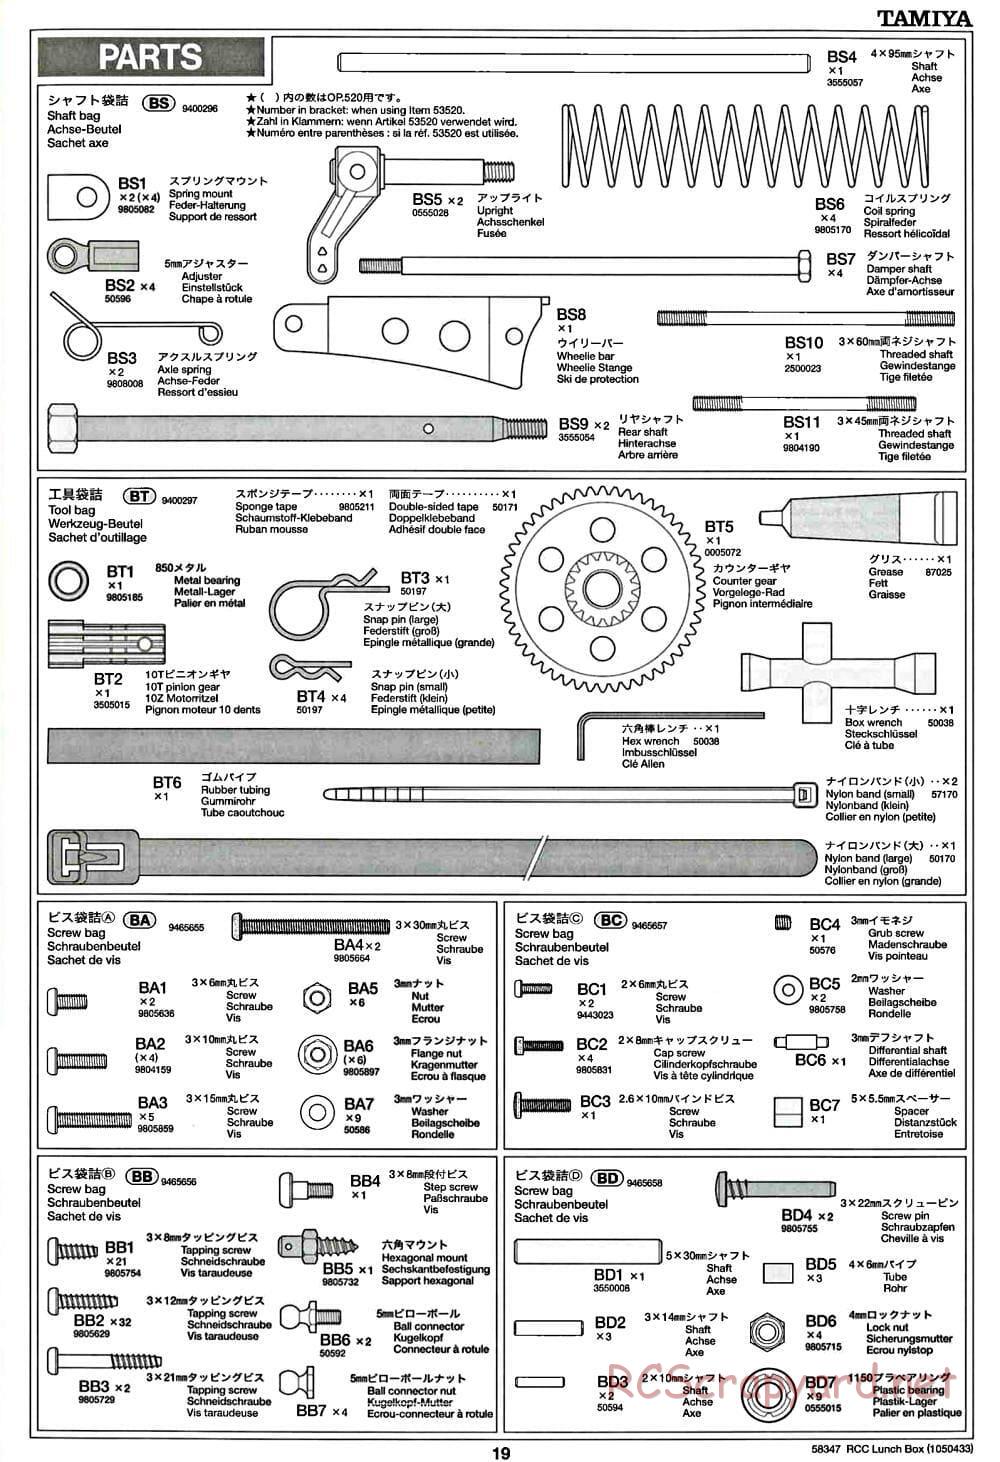 Tamiya - Vanessas Lunchbox - CW-01 Chassis - Manual - Page 19